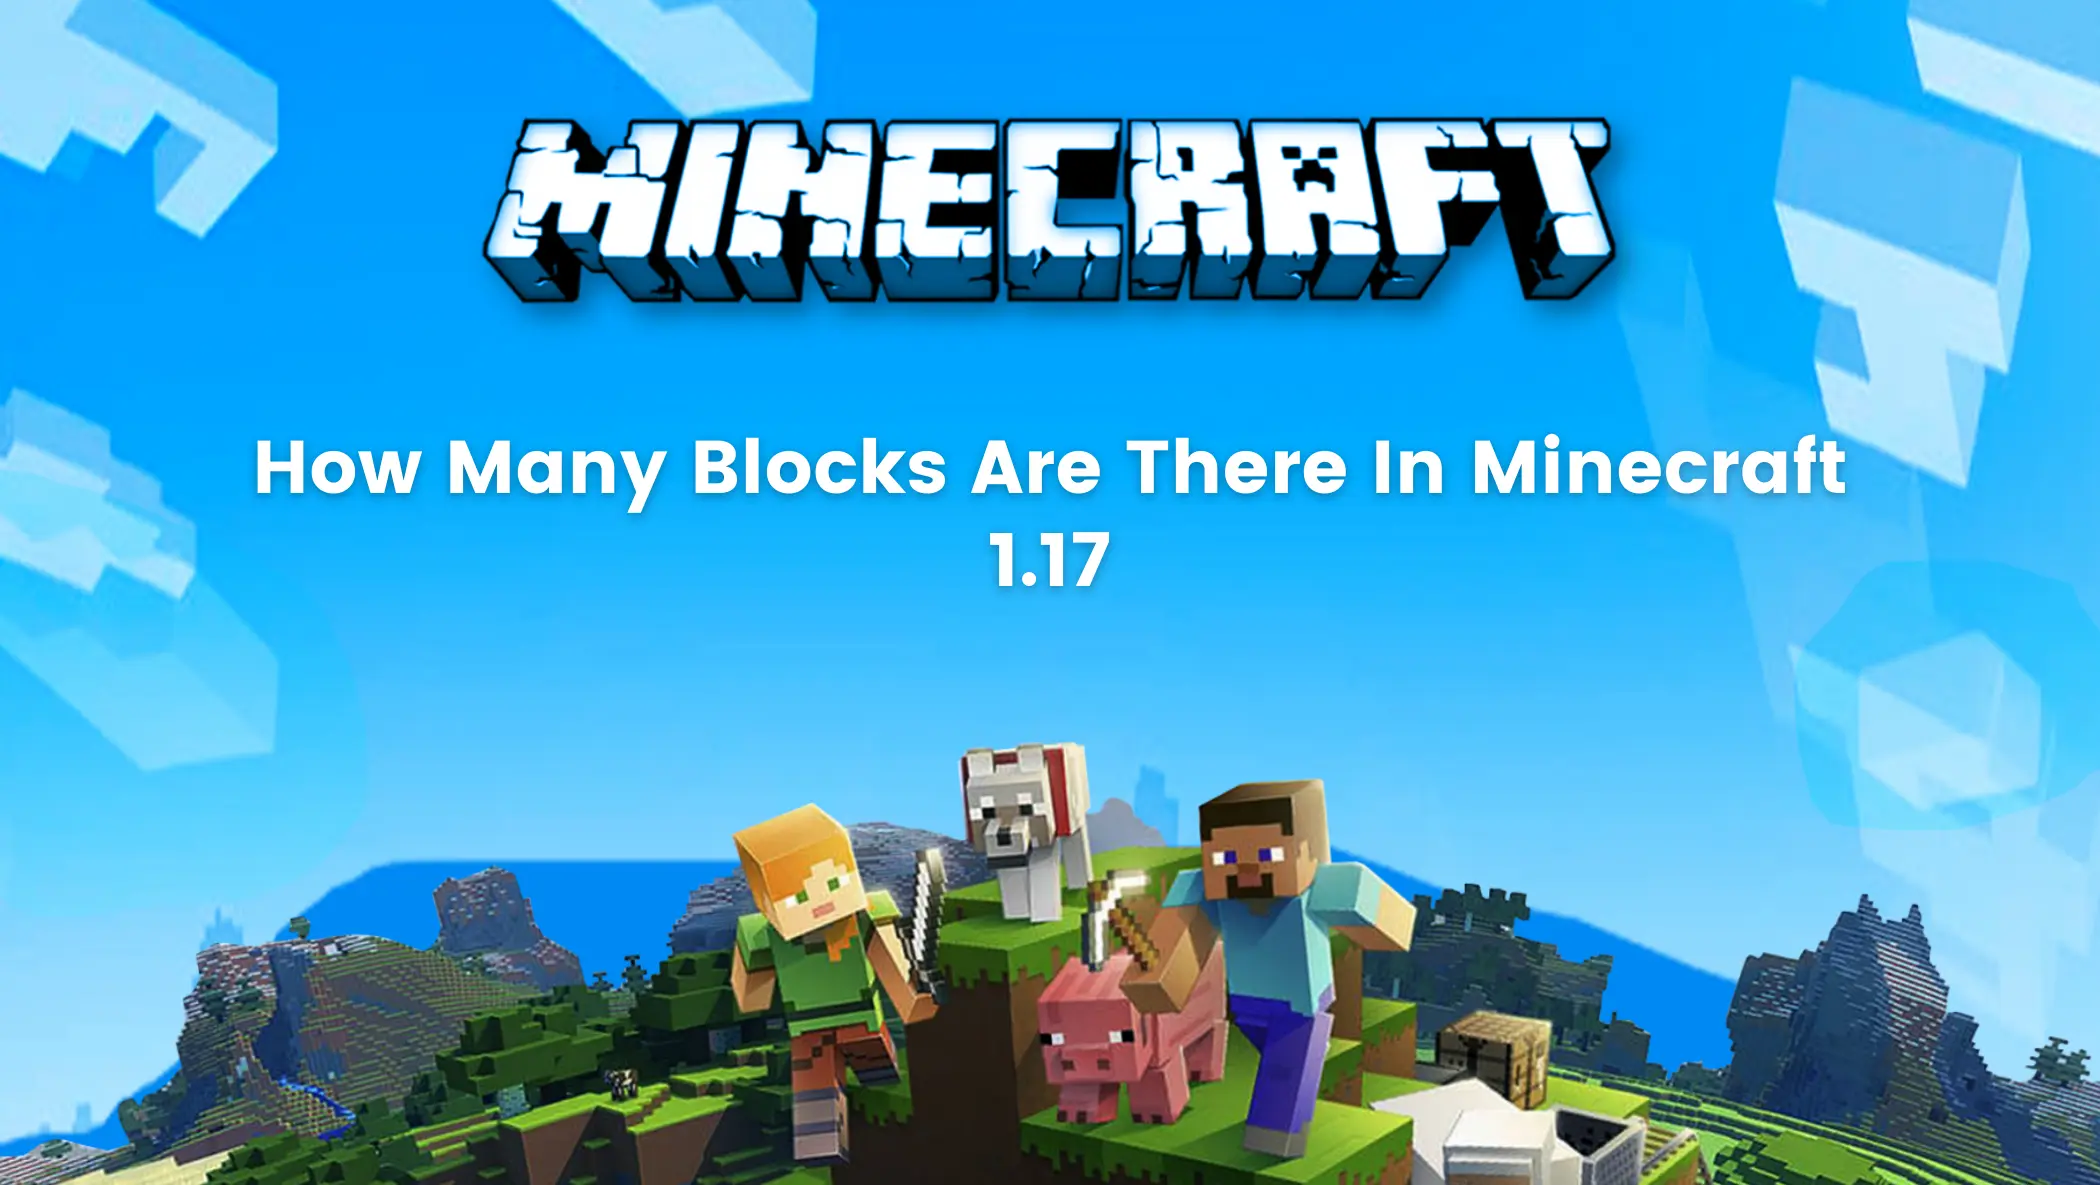 Minecraft has now an new monetary unit